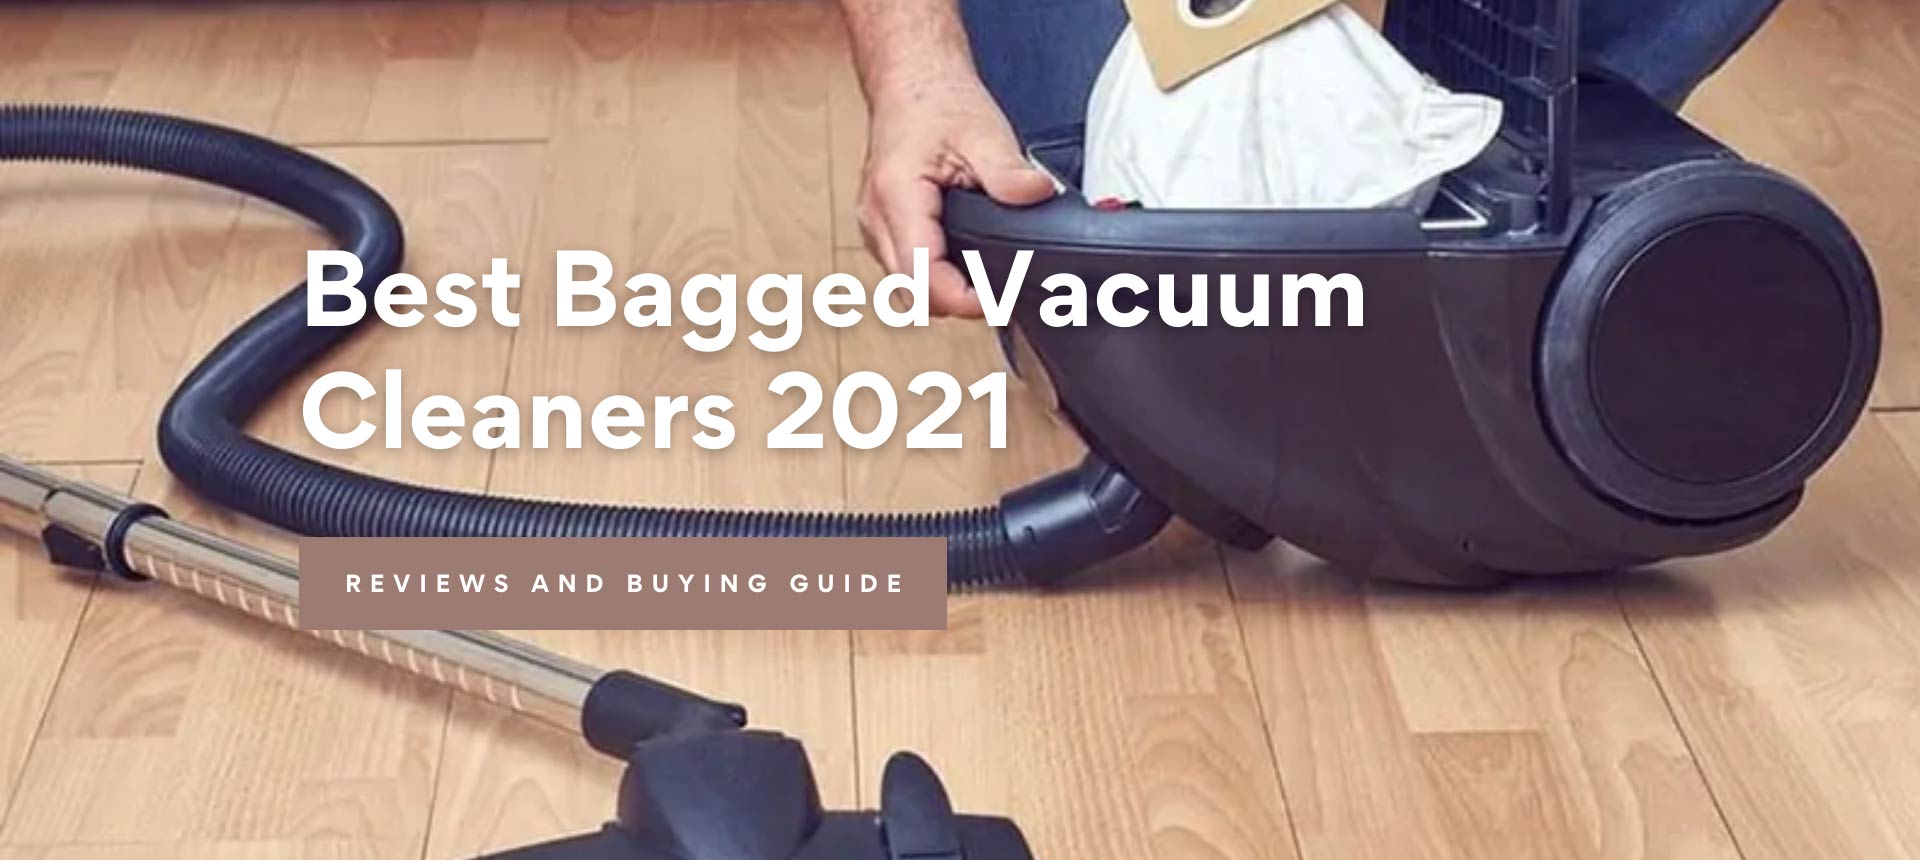 Best Bagged Vacuum Cleaners 2021